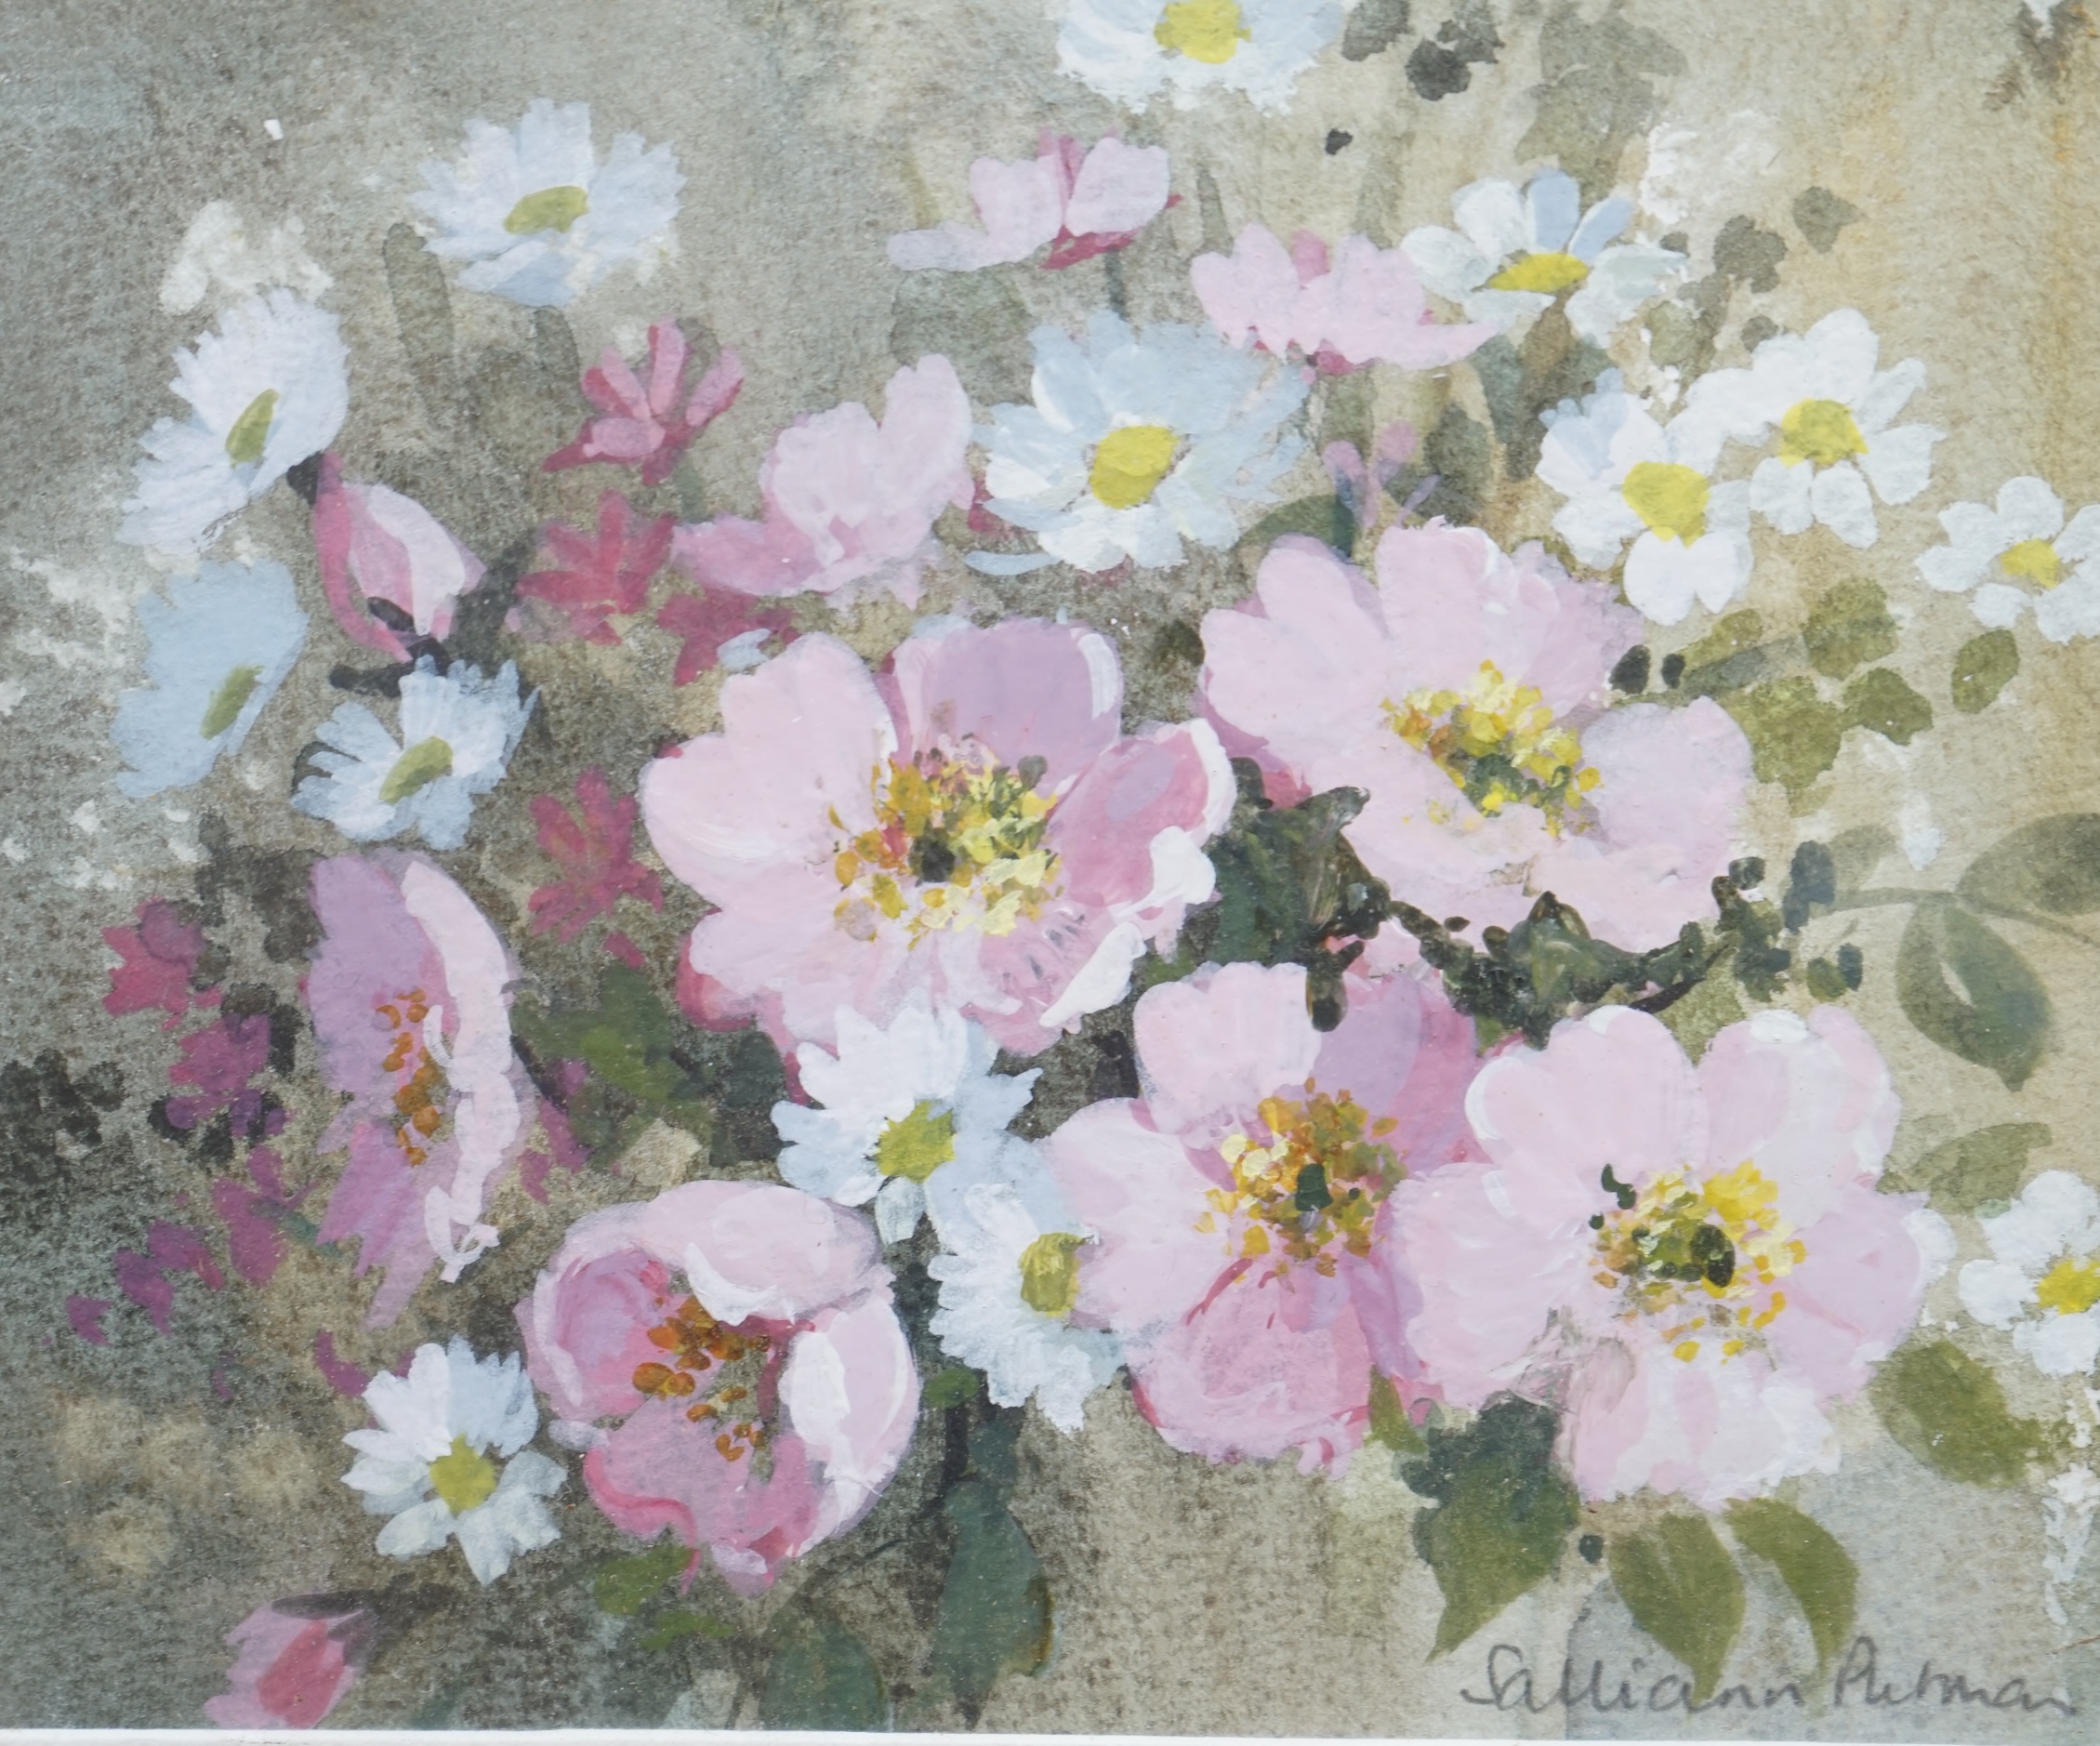 Salliann Putman RWS (b. 1937), watercolour and gouache, Still life of flowers, signed, 12.5 x 14cm. Condition - fair